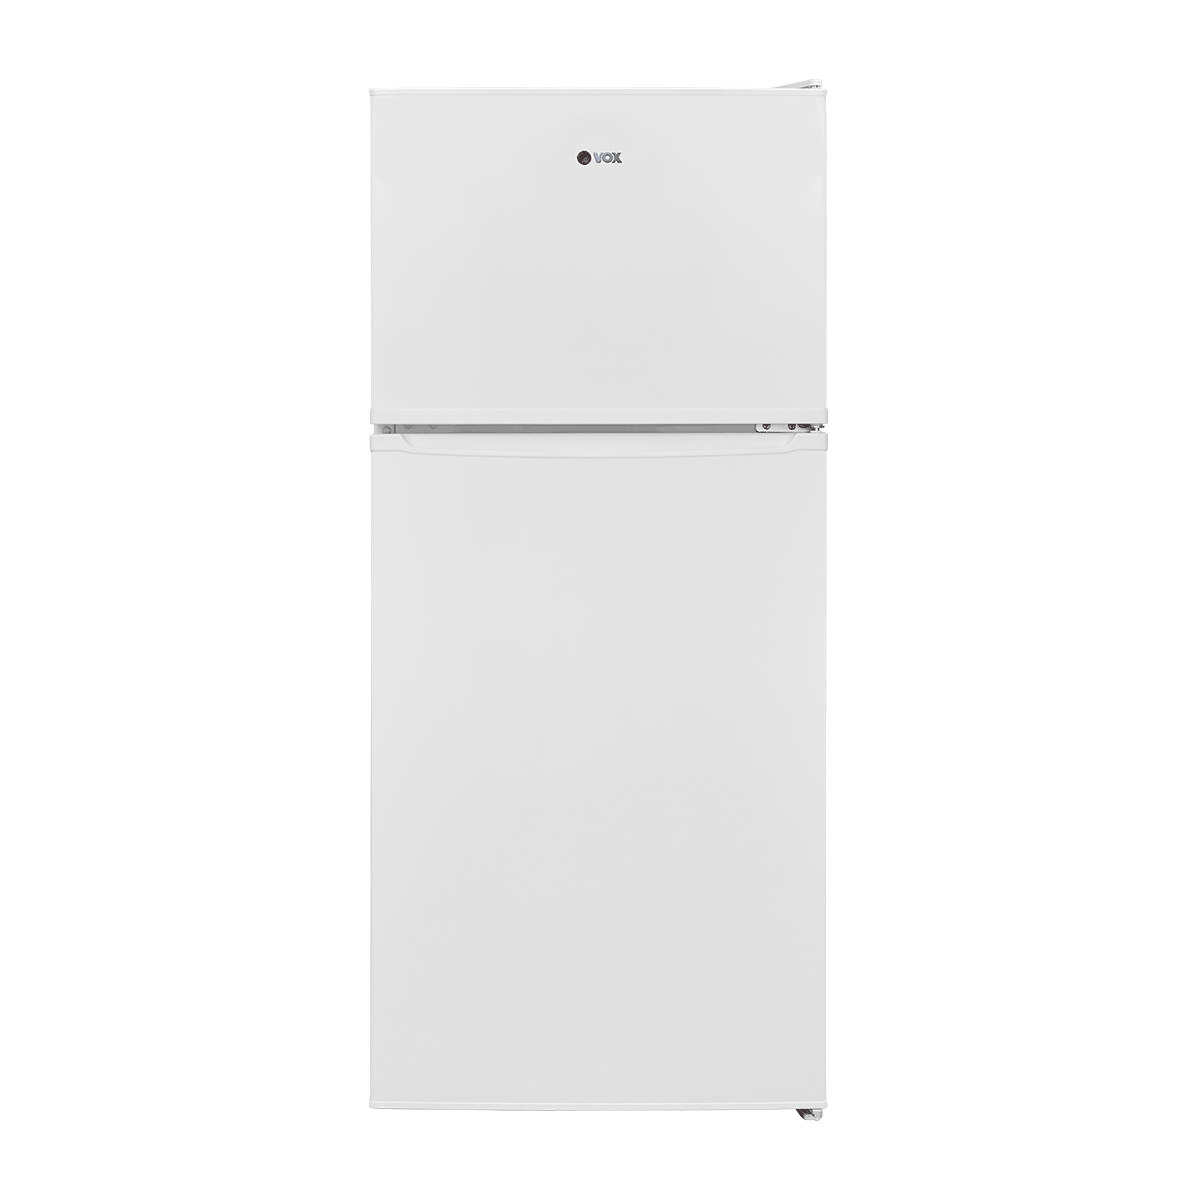 Combined refrigerator KG 2330 F 